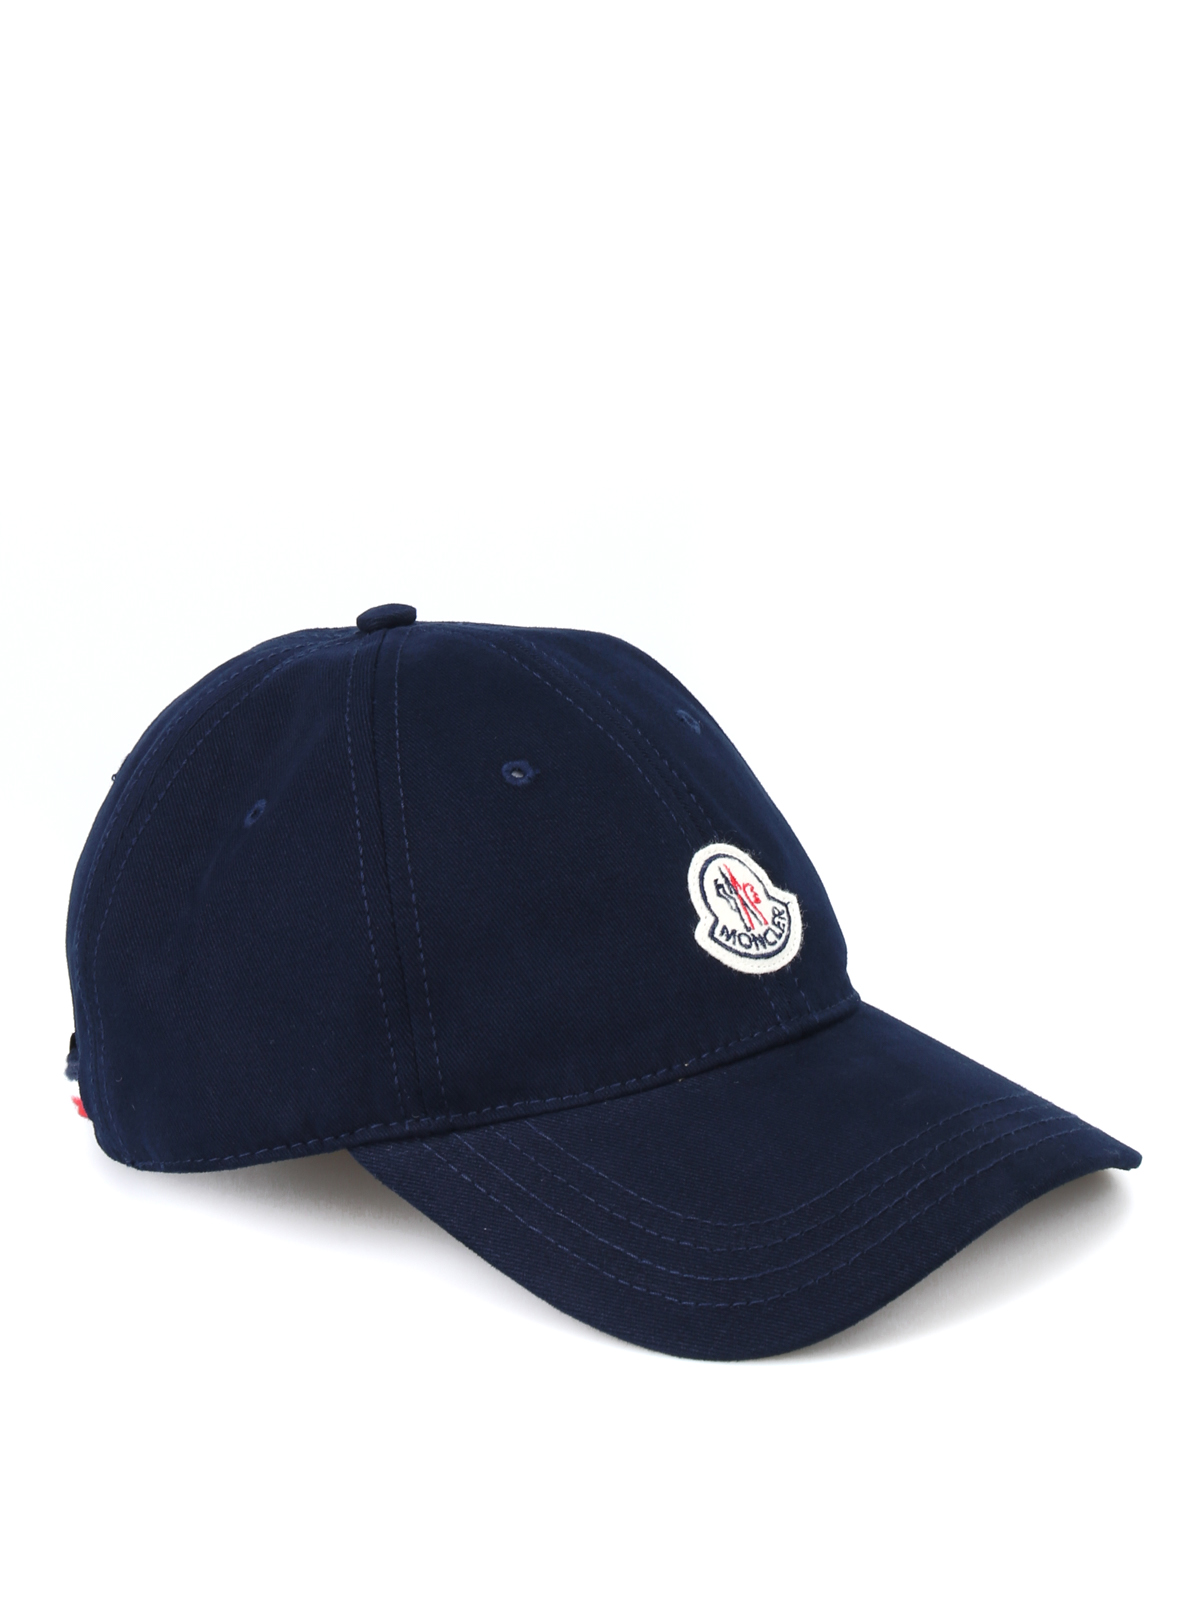 Blue soft cotton baseball cap - hats 